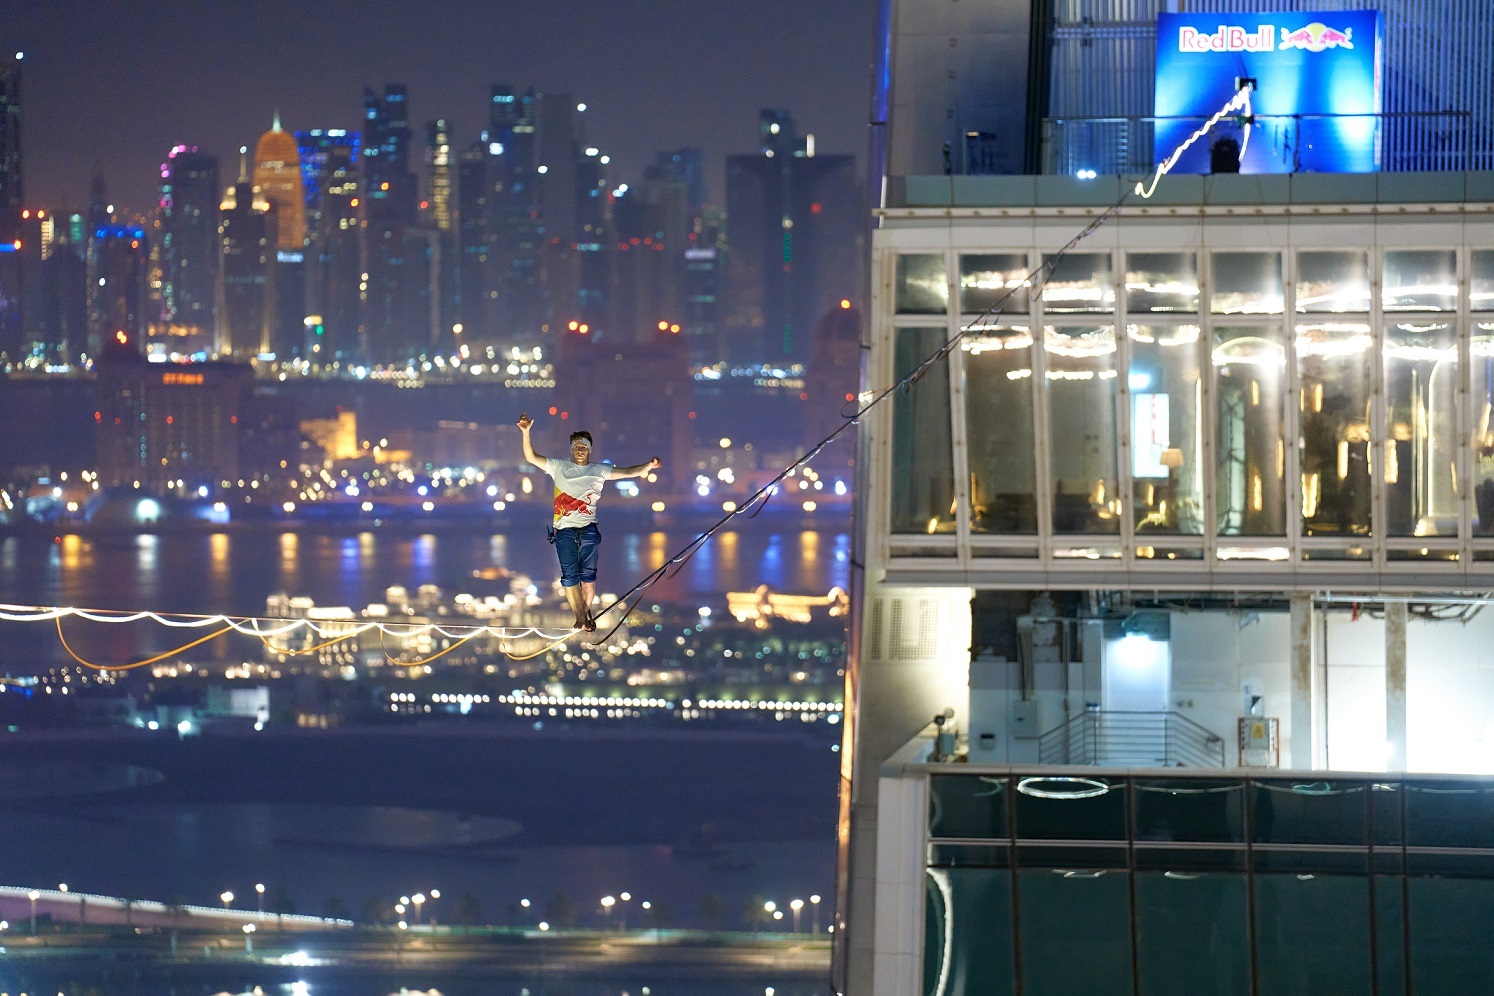 Daredevil athlete sets record for longest LED slackline walk on iconic Qatar tower